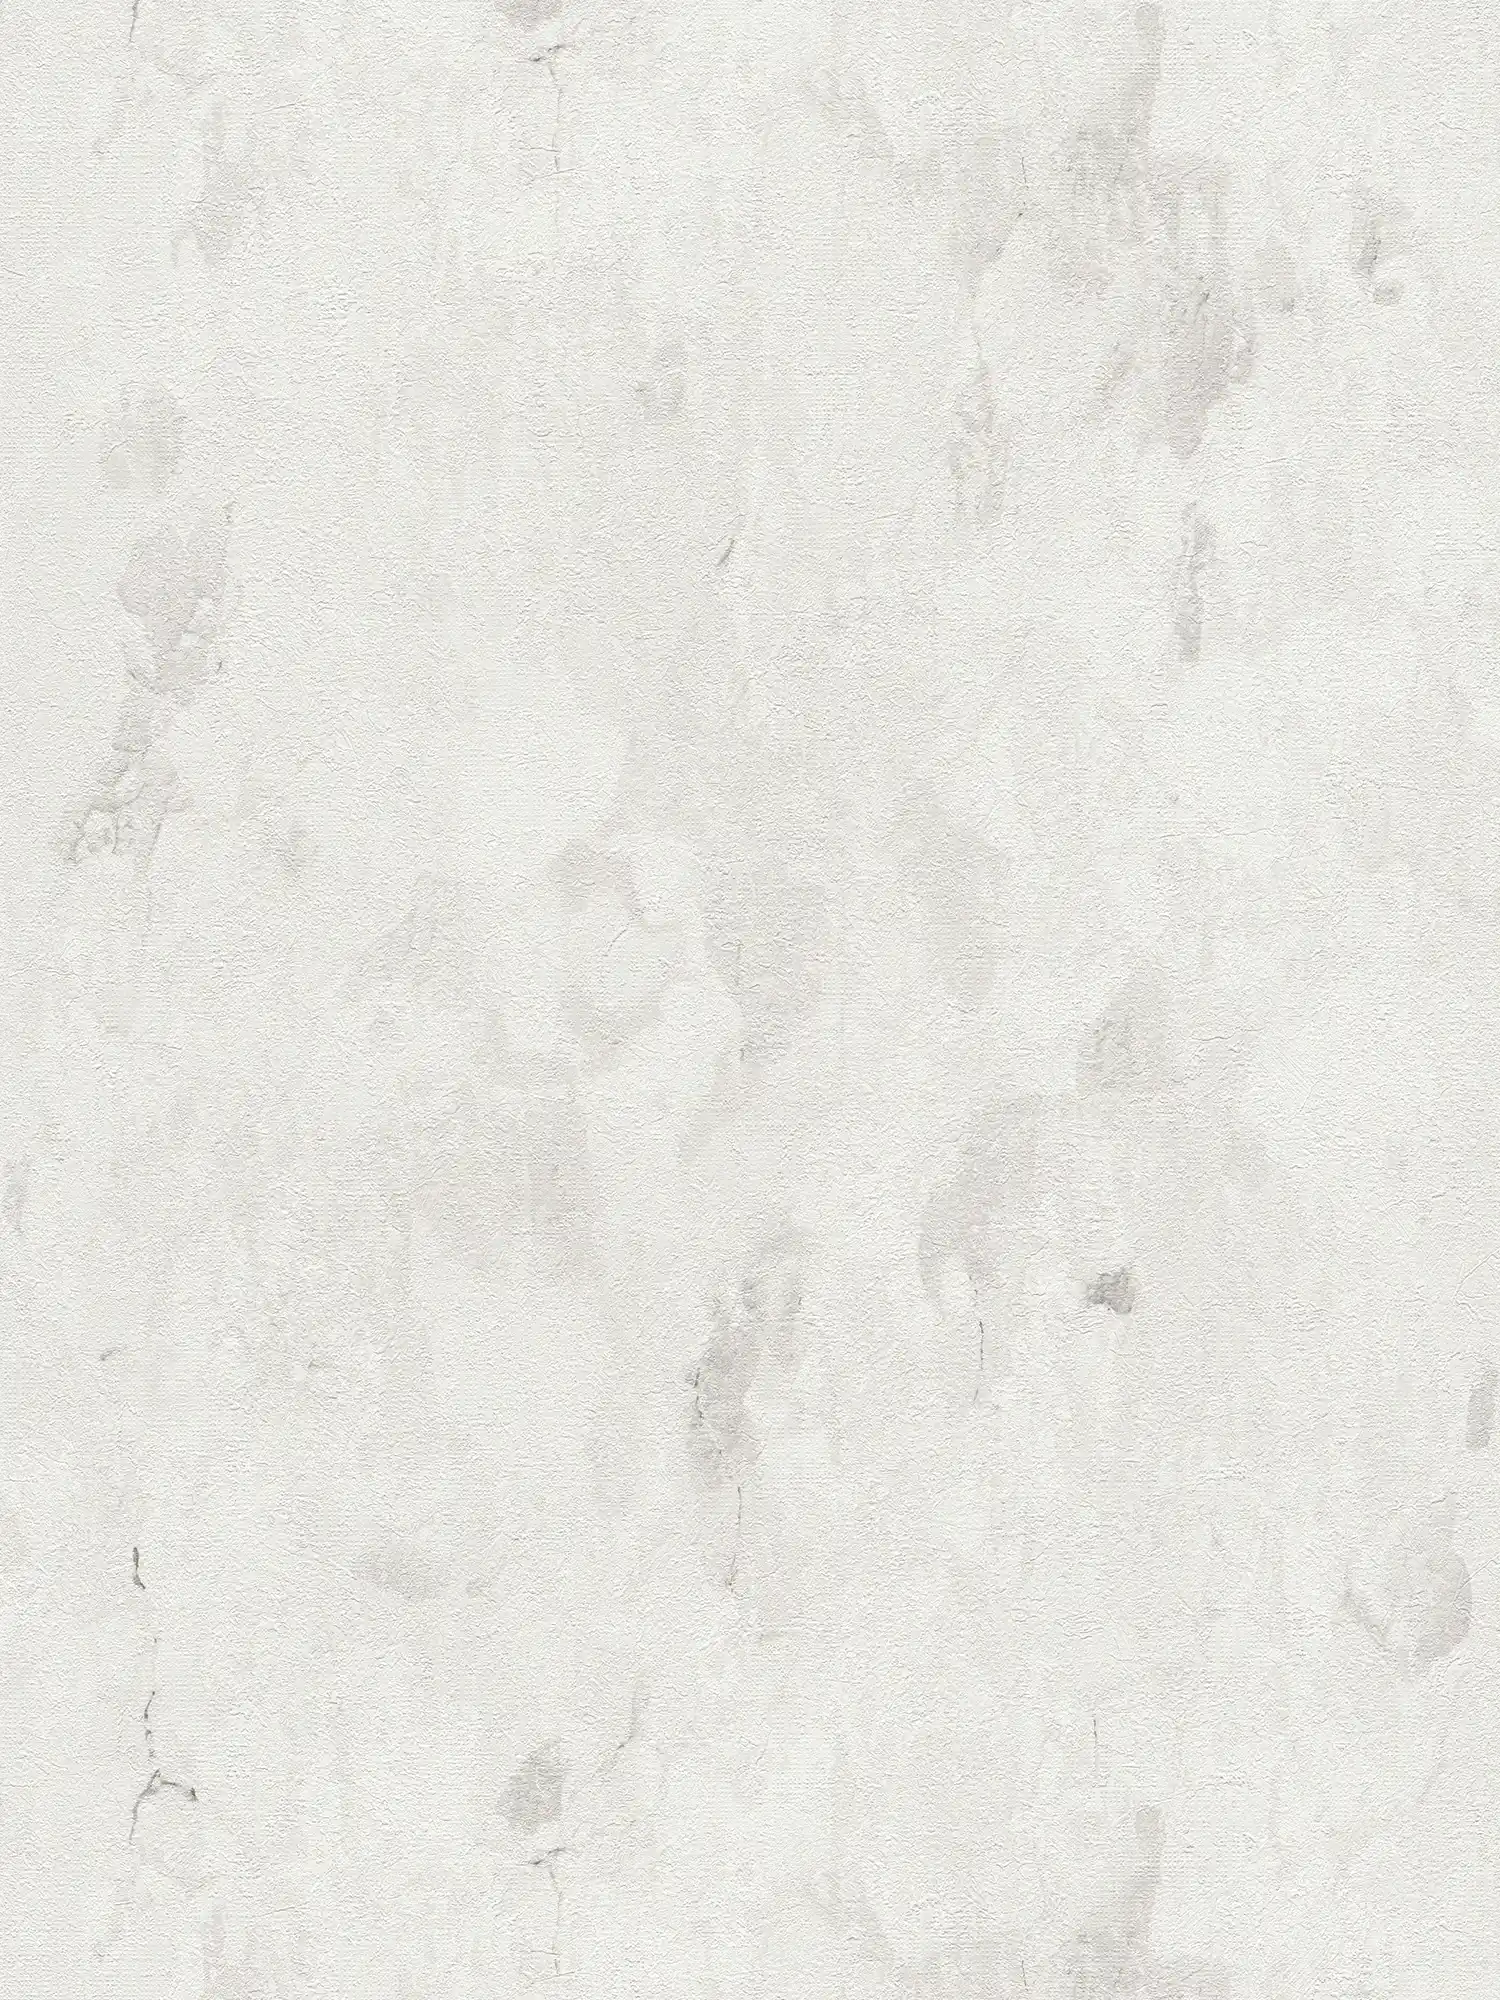         Vliesbehang met rustiek design in used look - crème, grijs, wit
    